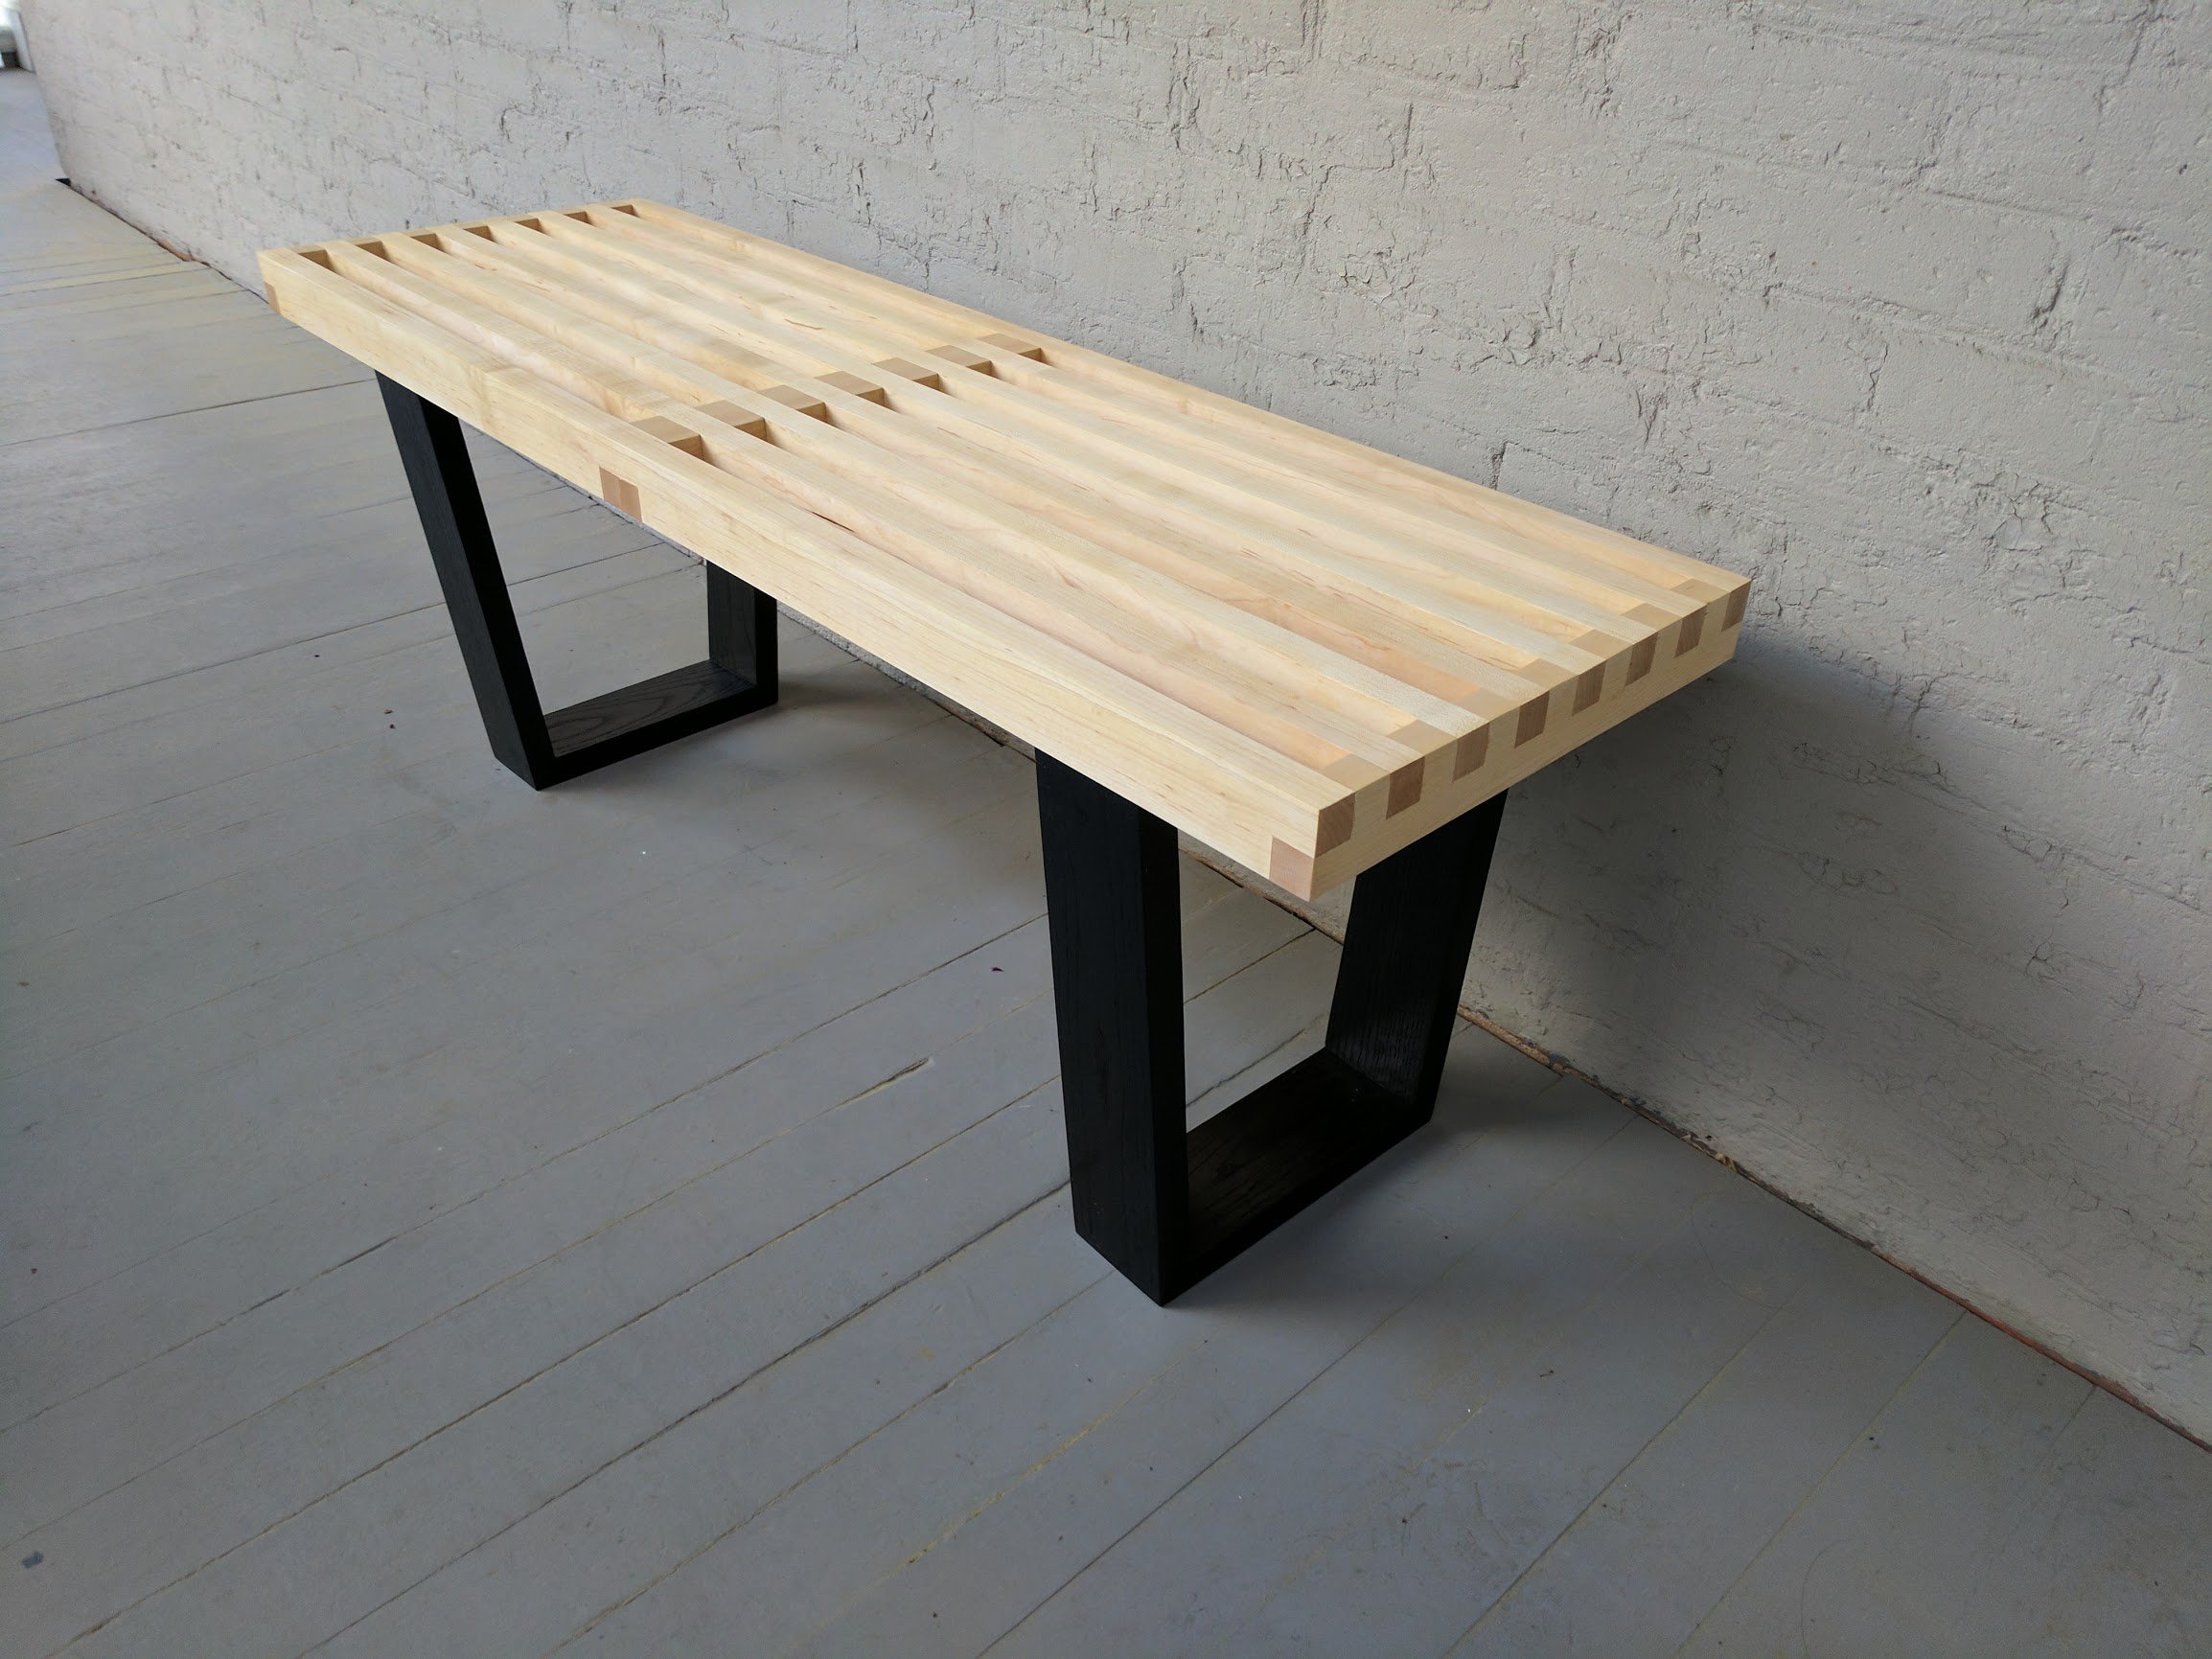 "Nelson" style platform bench